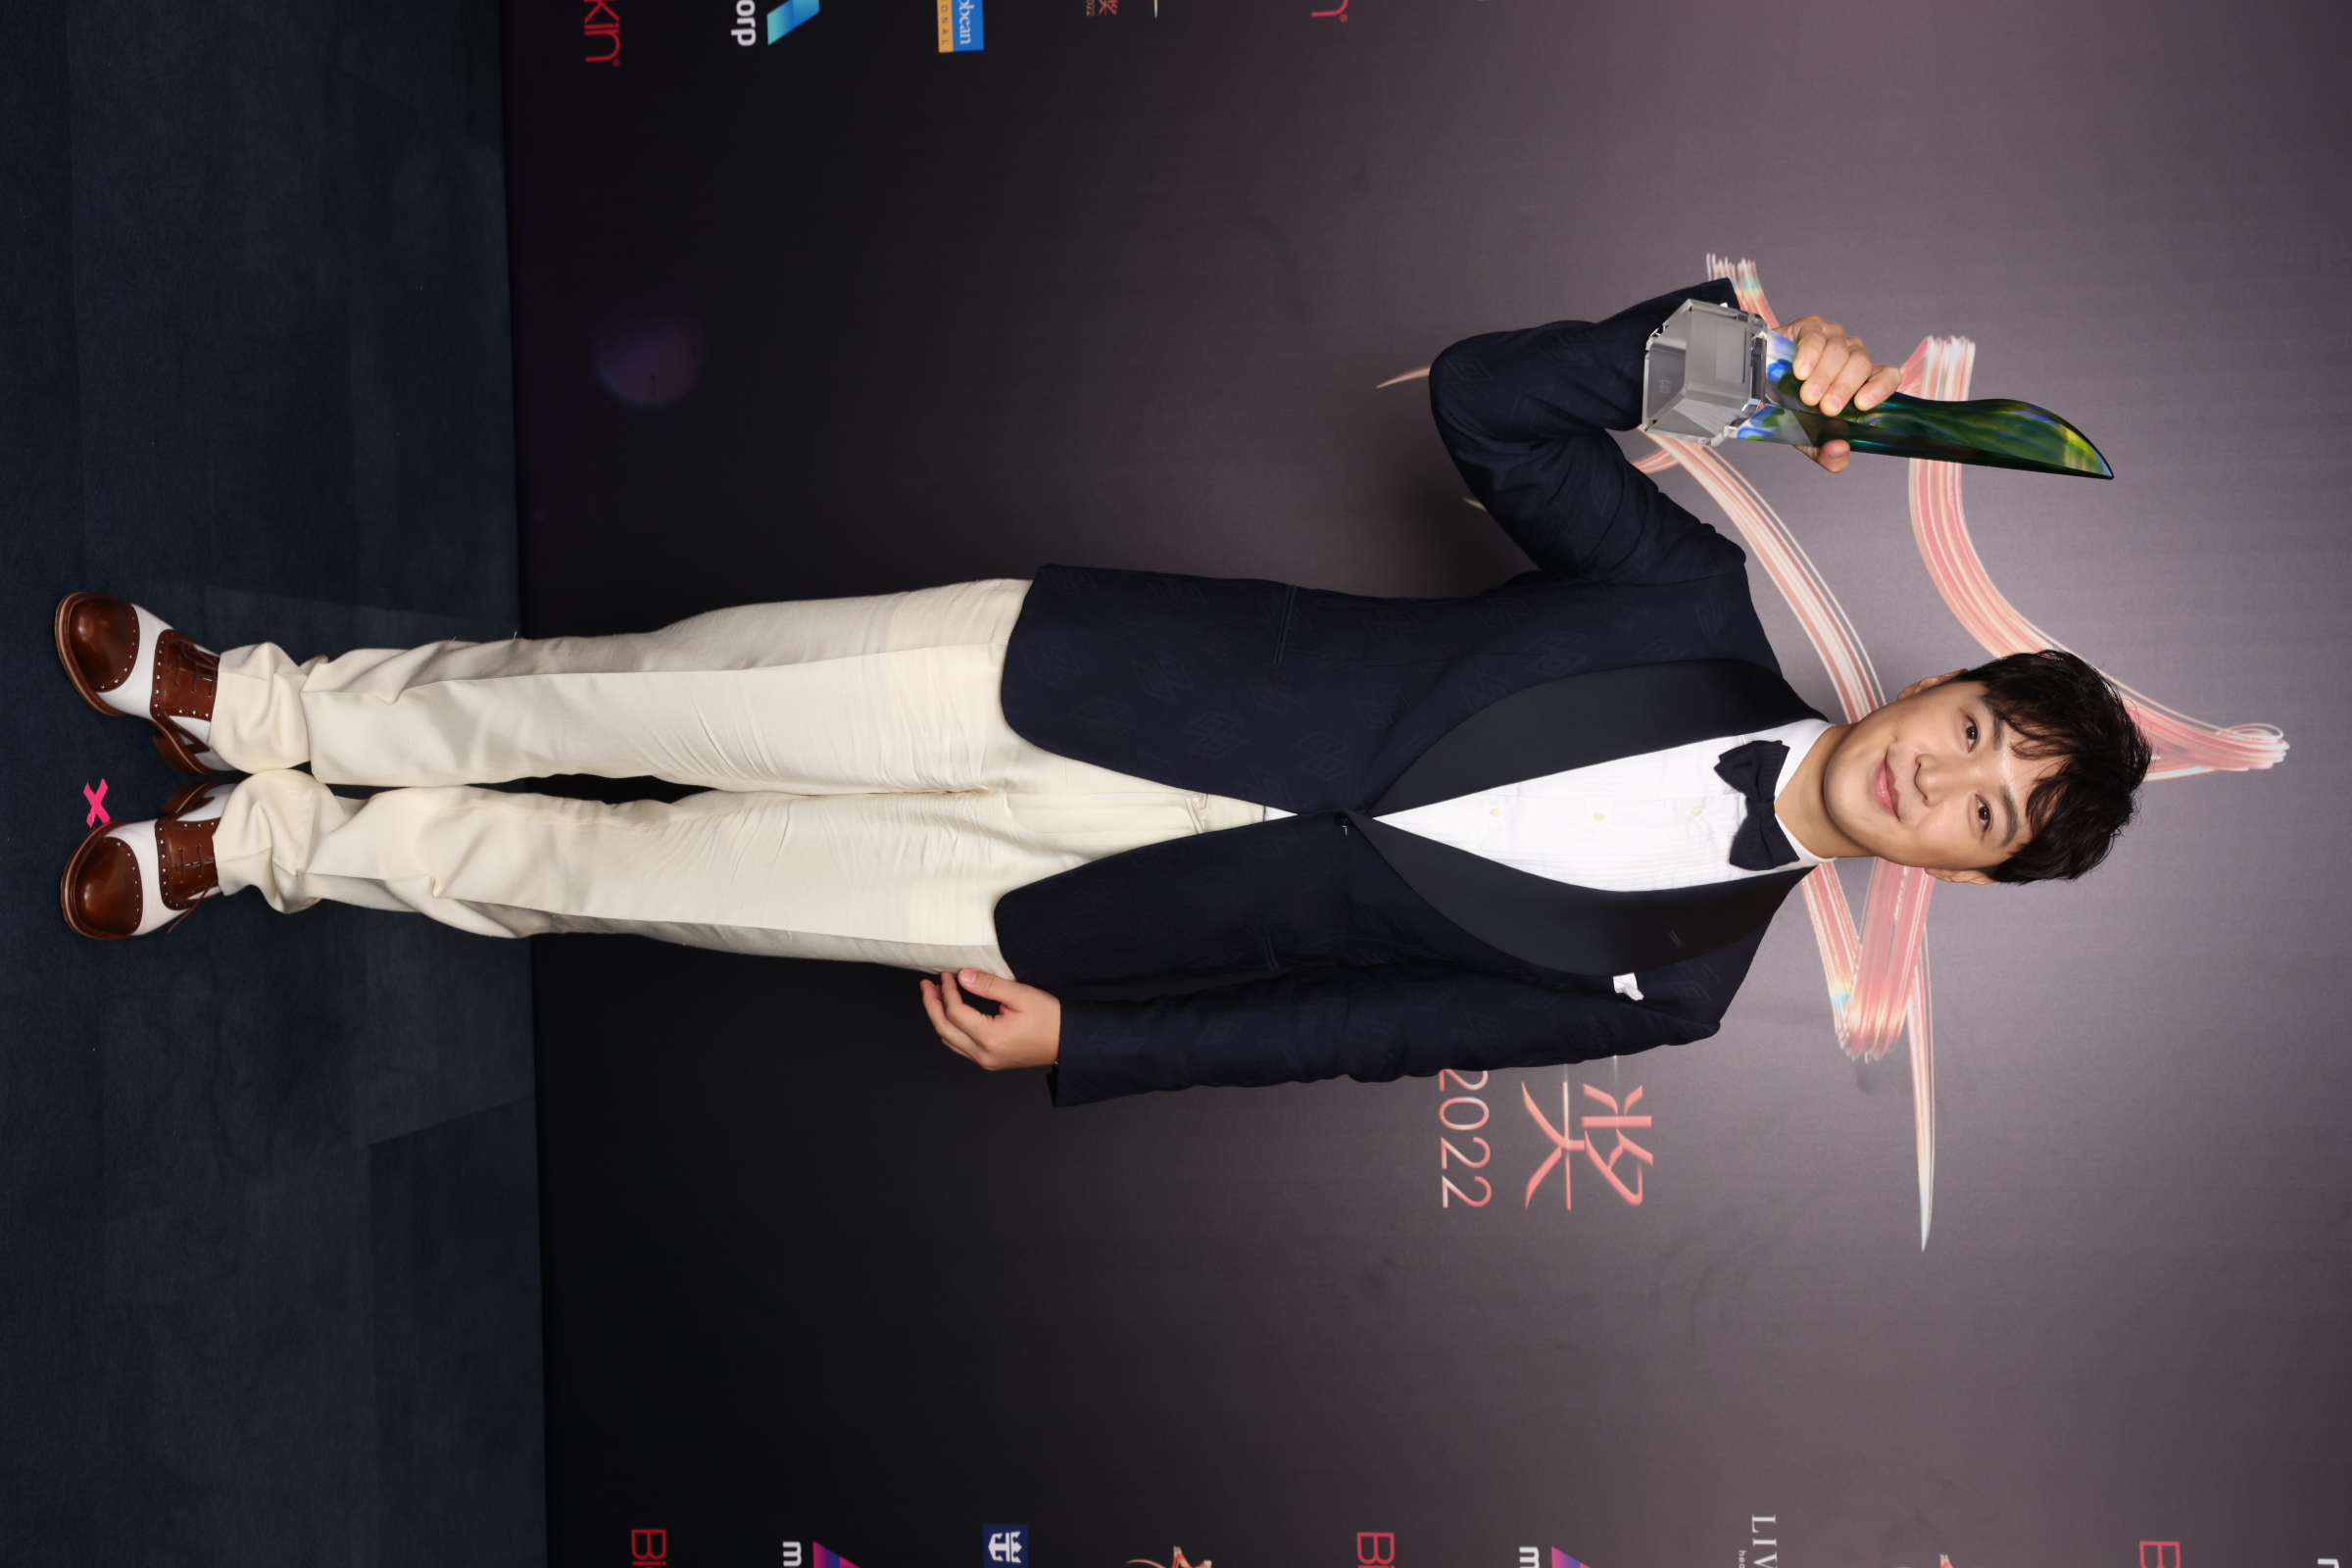 Jeffrey bagged his first professional acting award at the Star Awards 2022